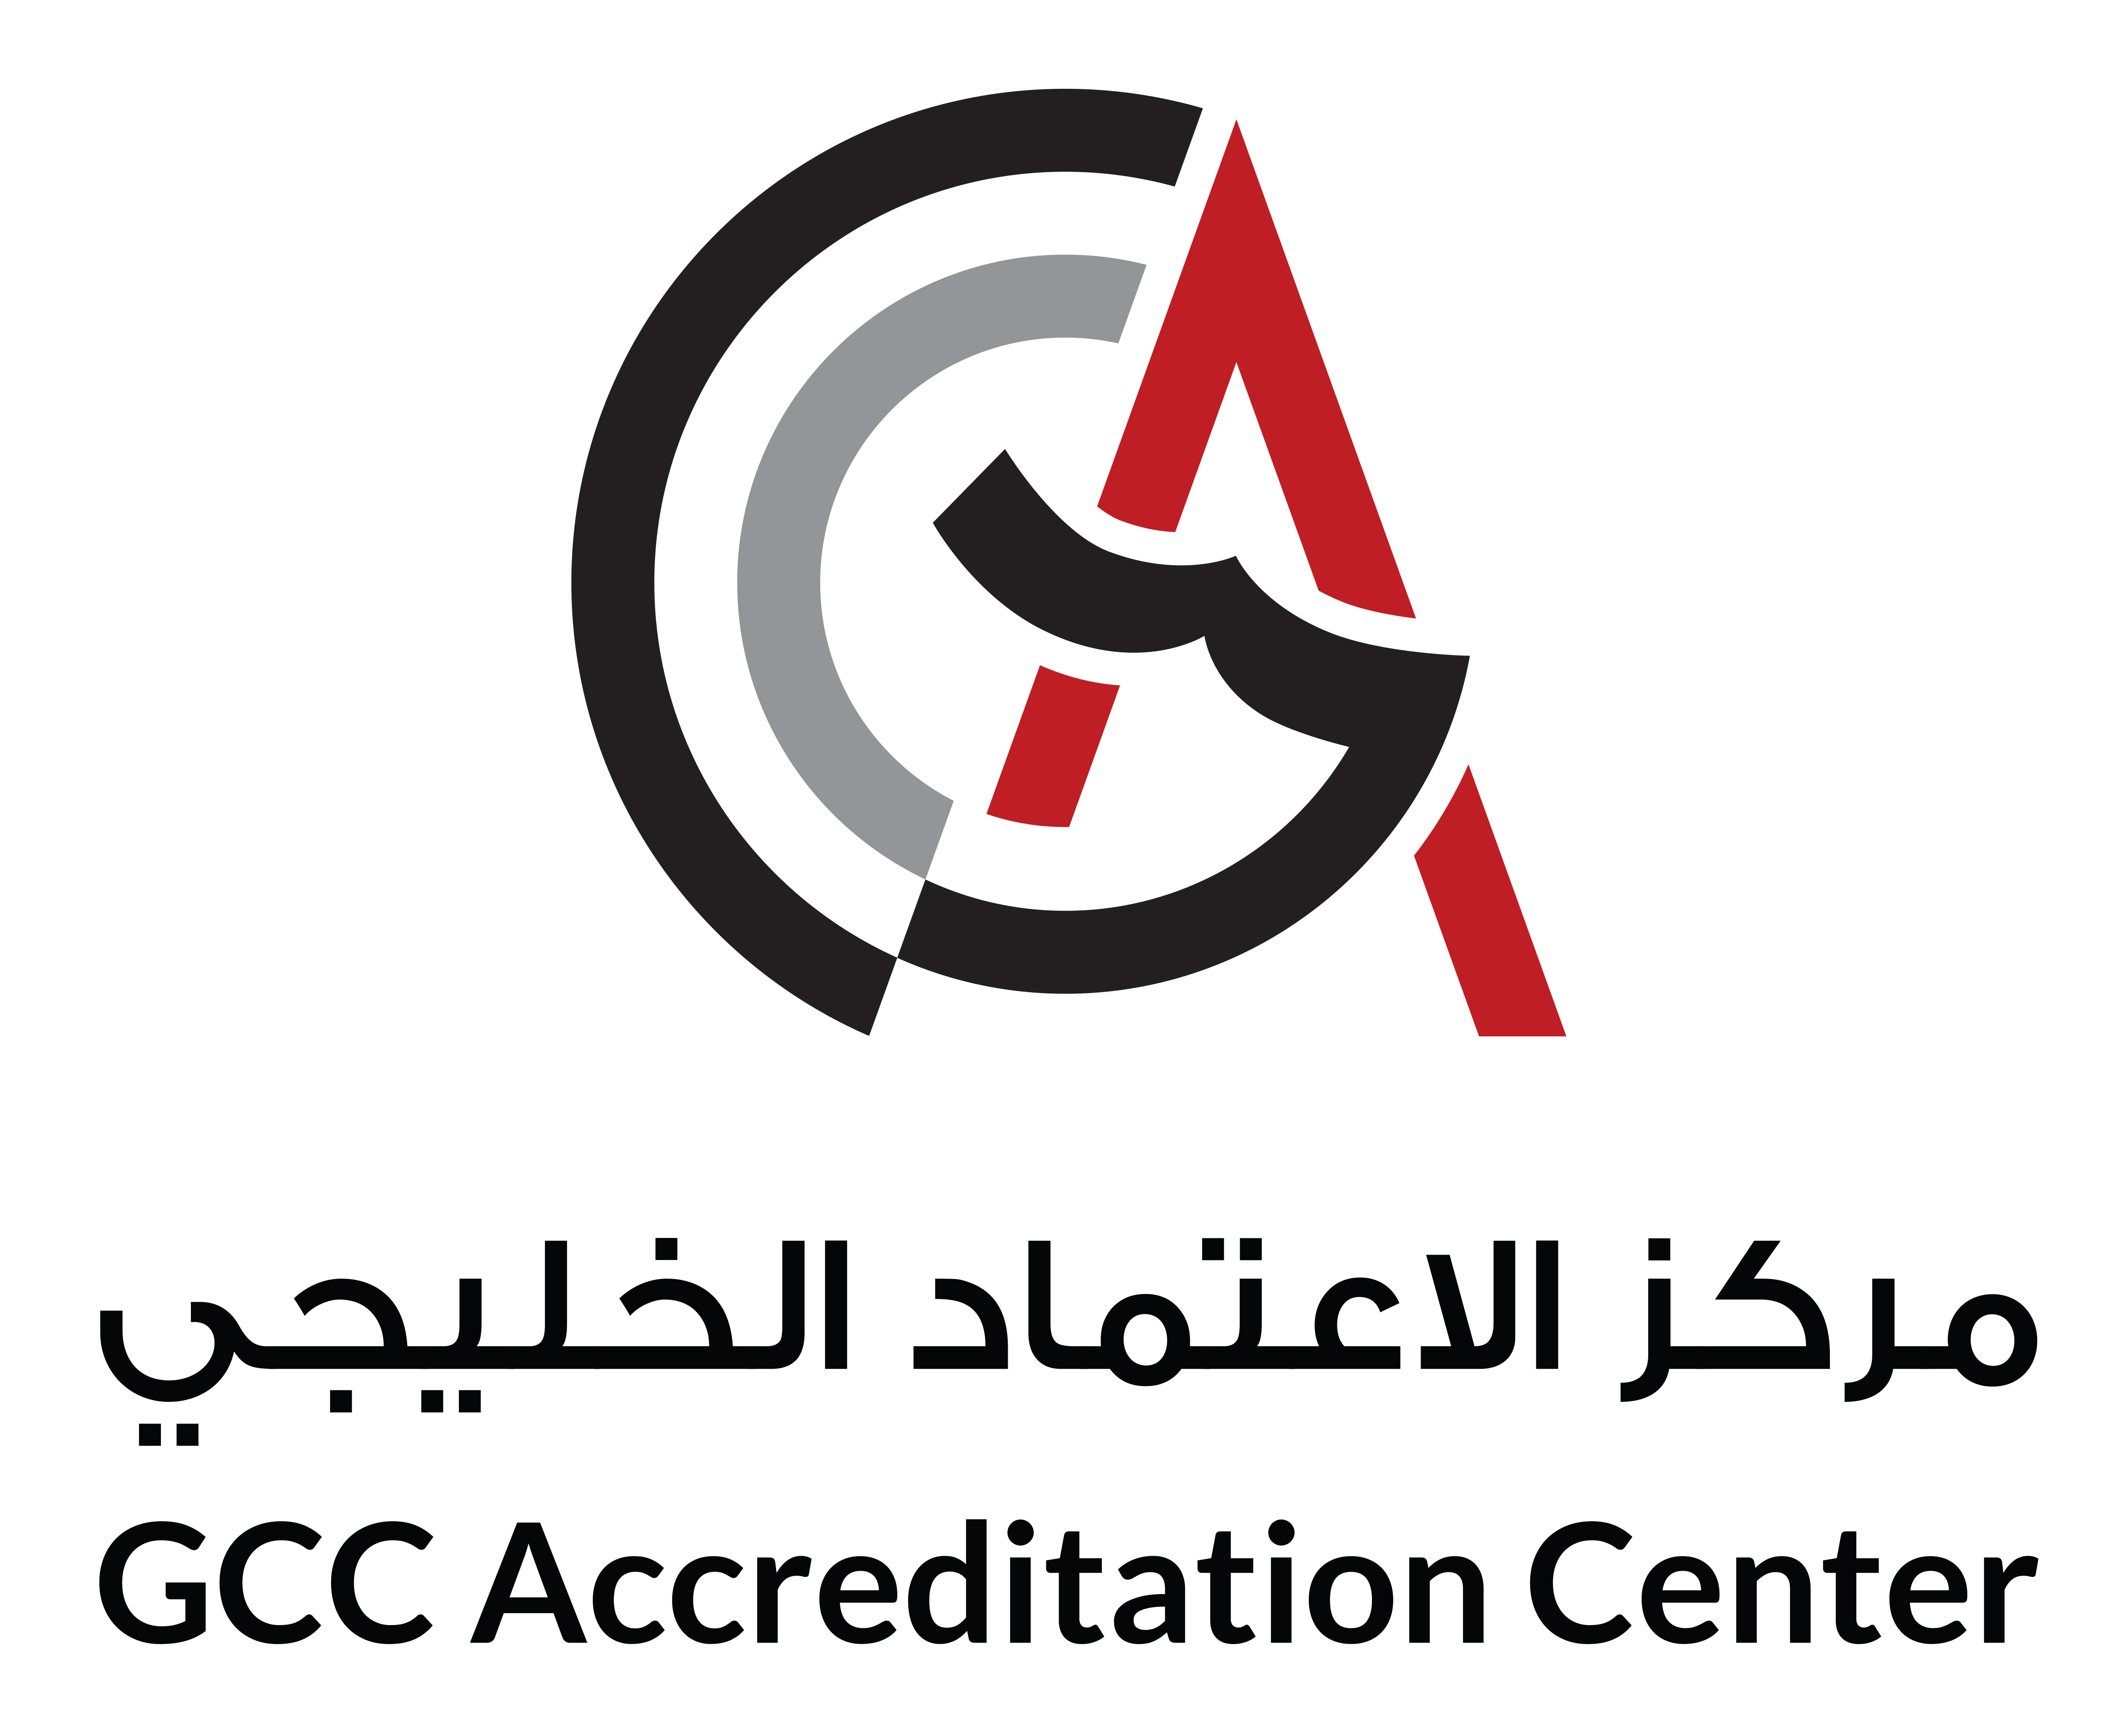 GCC accreditation Center - GAC